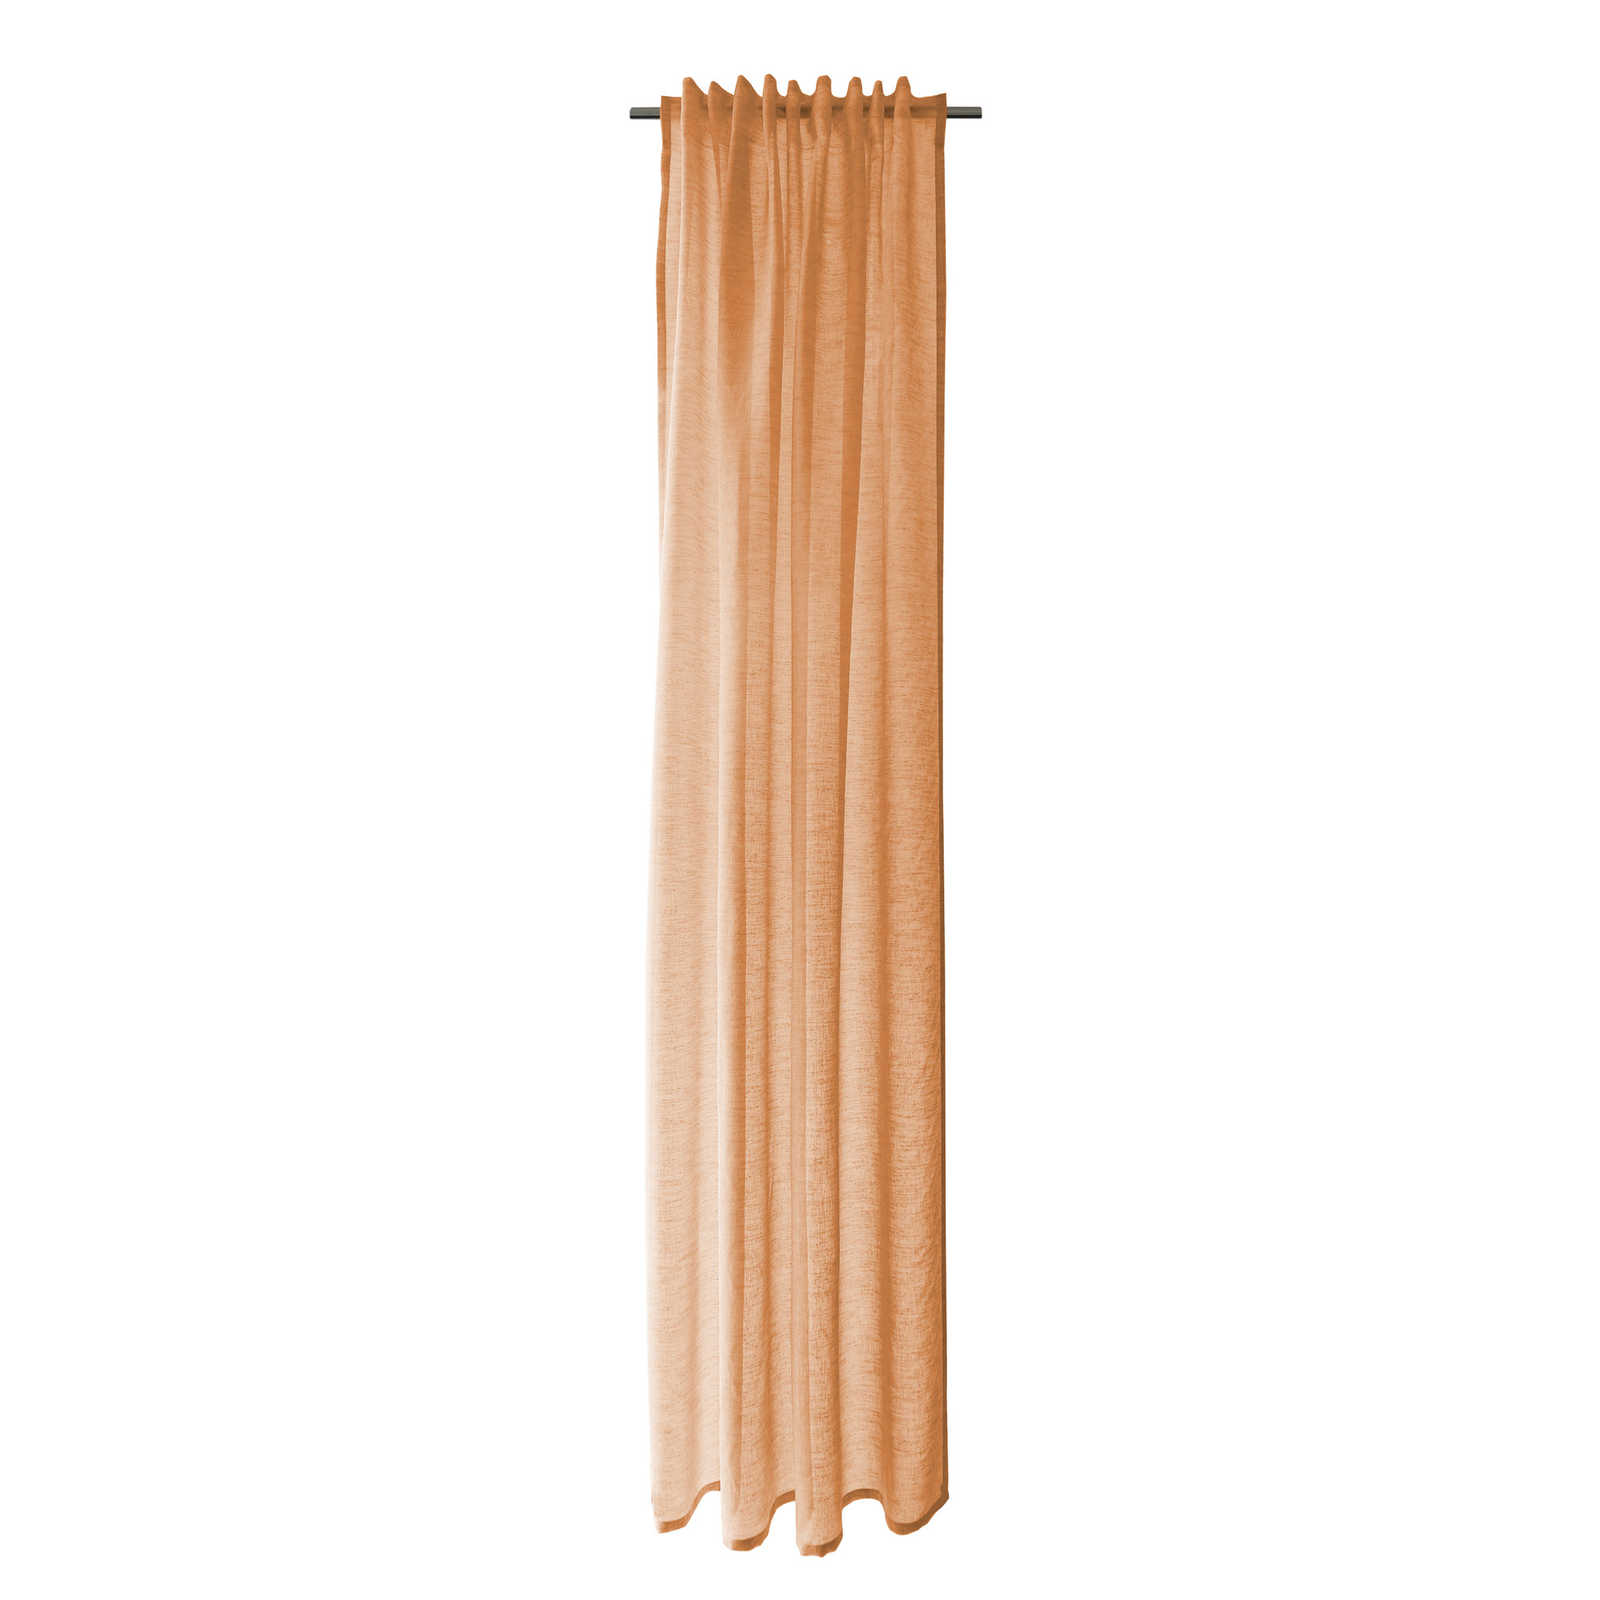         Bufanda lazo decorativa 140 cm x 245 cm fibra sintética terracota
    